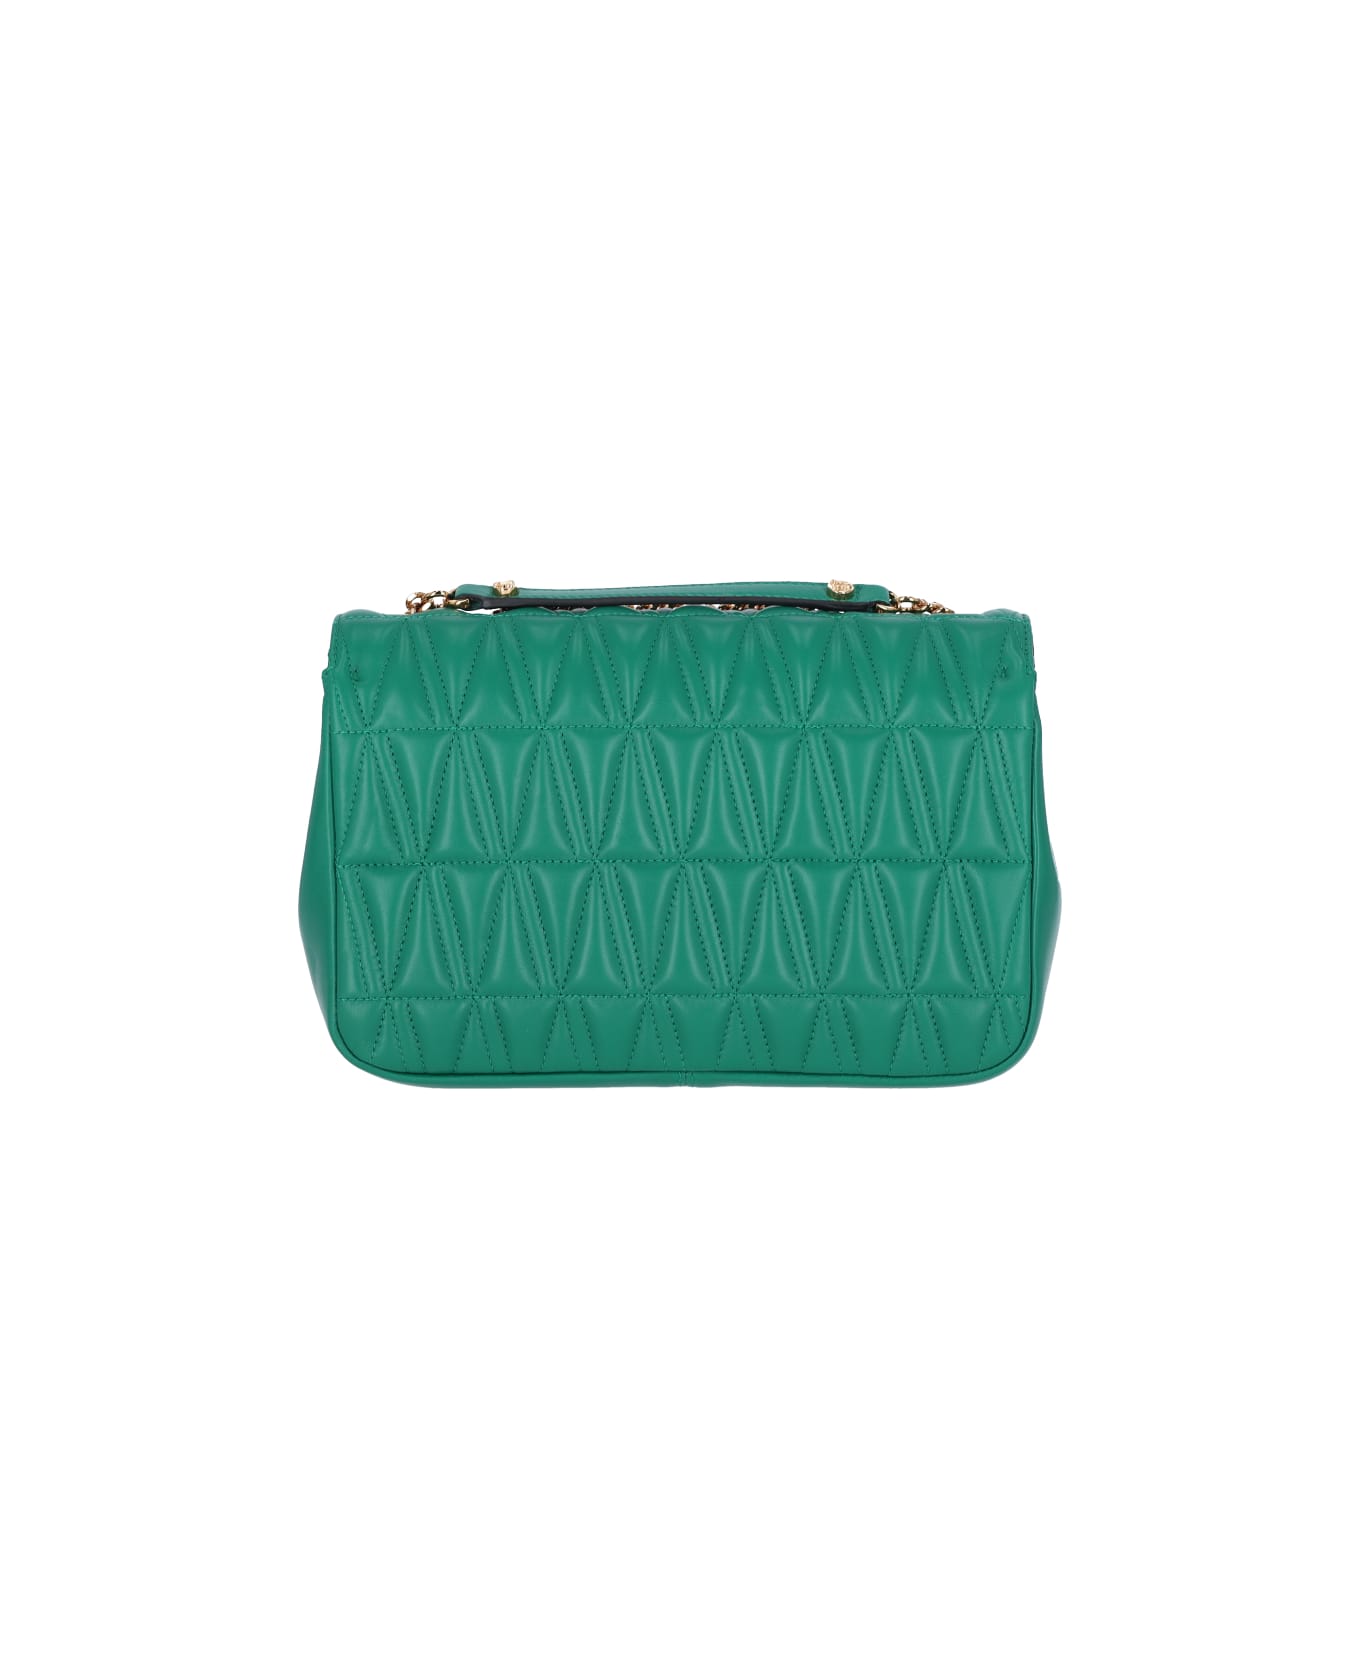 Versace Shoulder Bag - Green